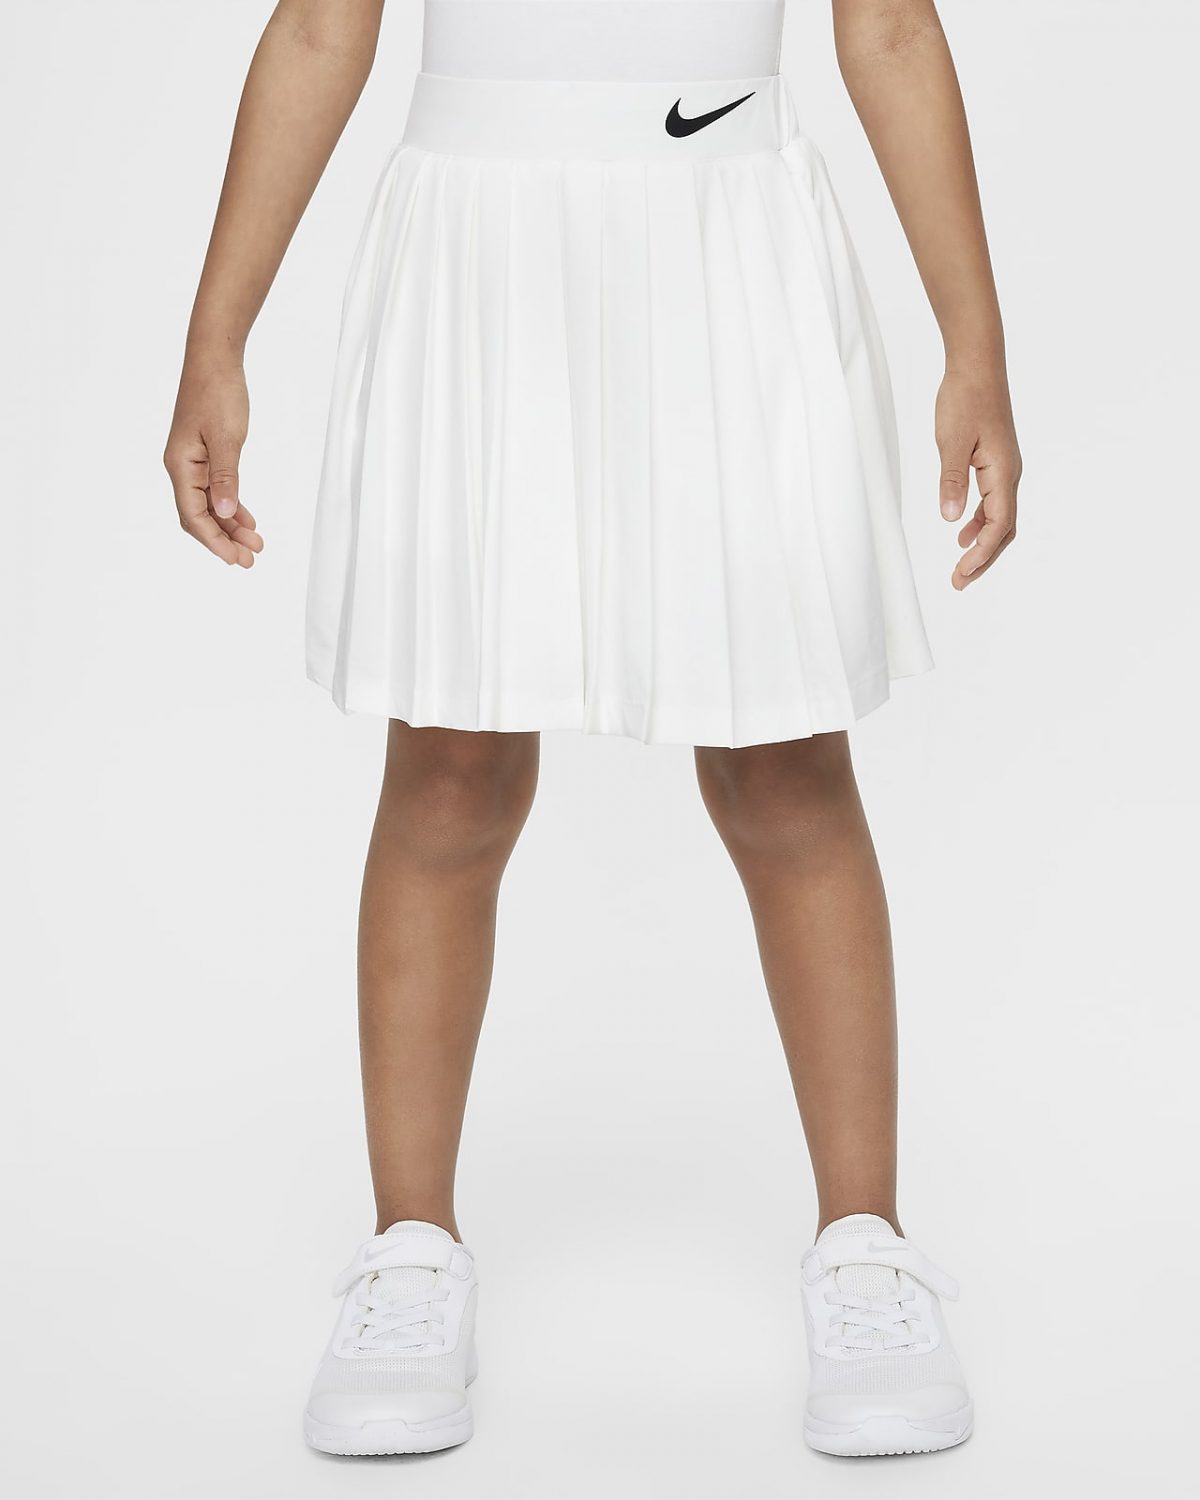 Детская юбка Nike Jelly белая фото